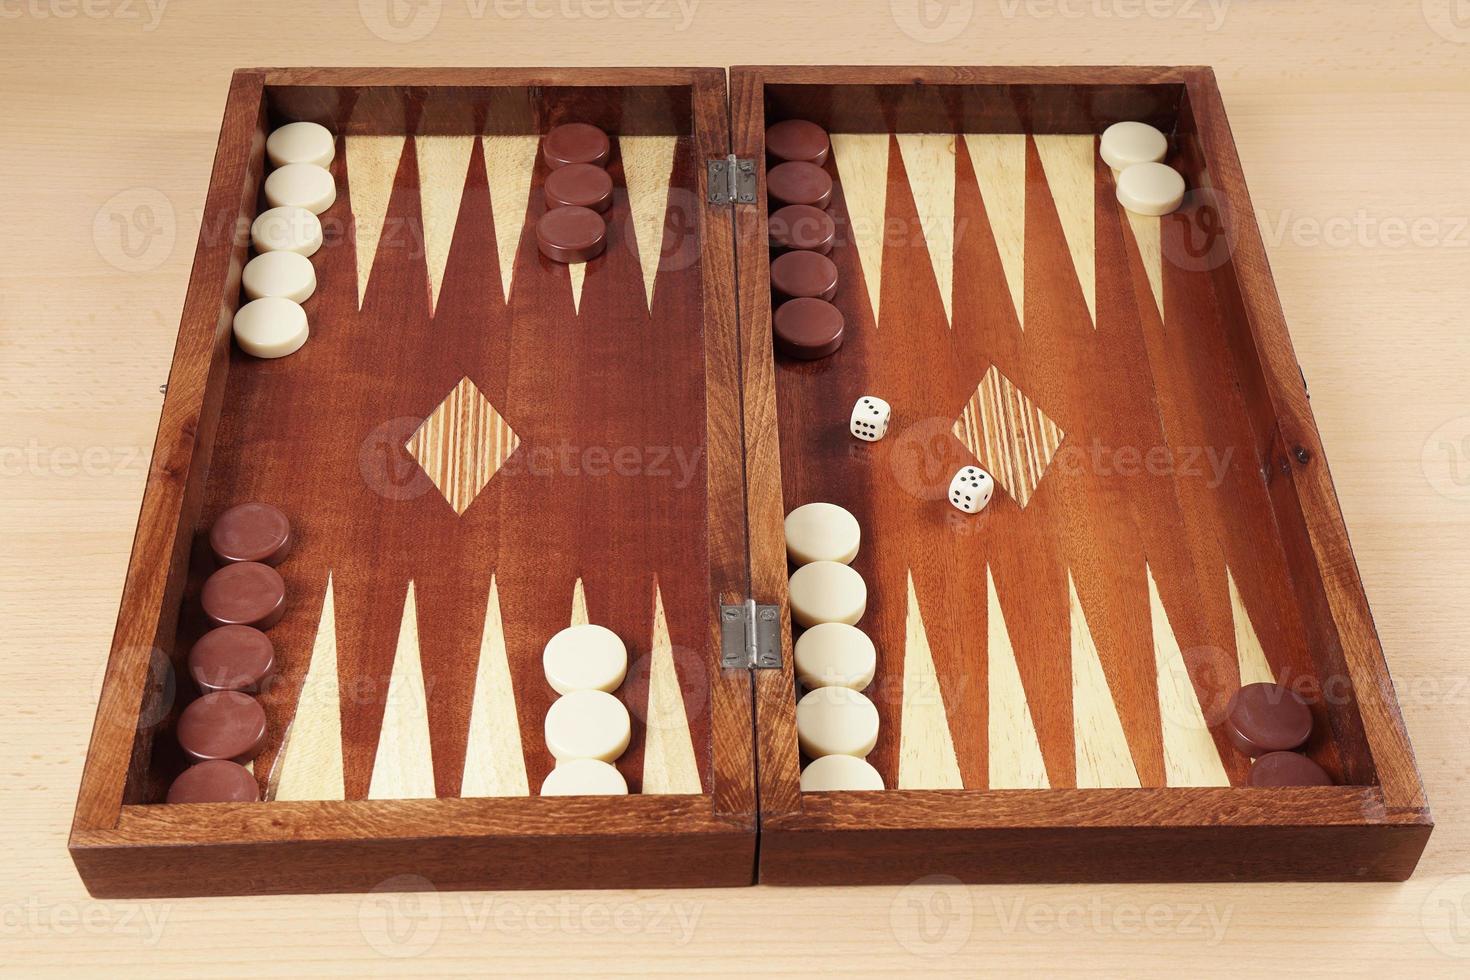 tablero de backgammon en la mesa foto